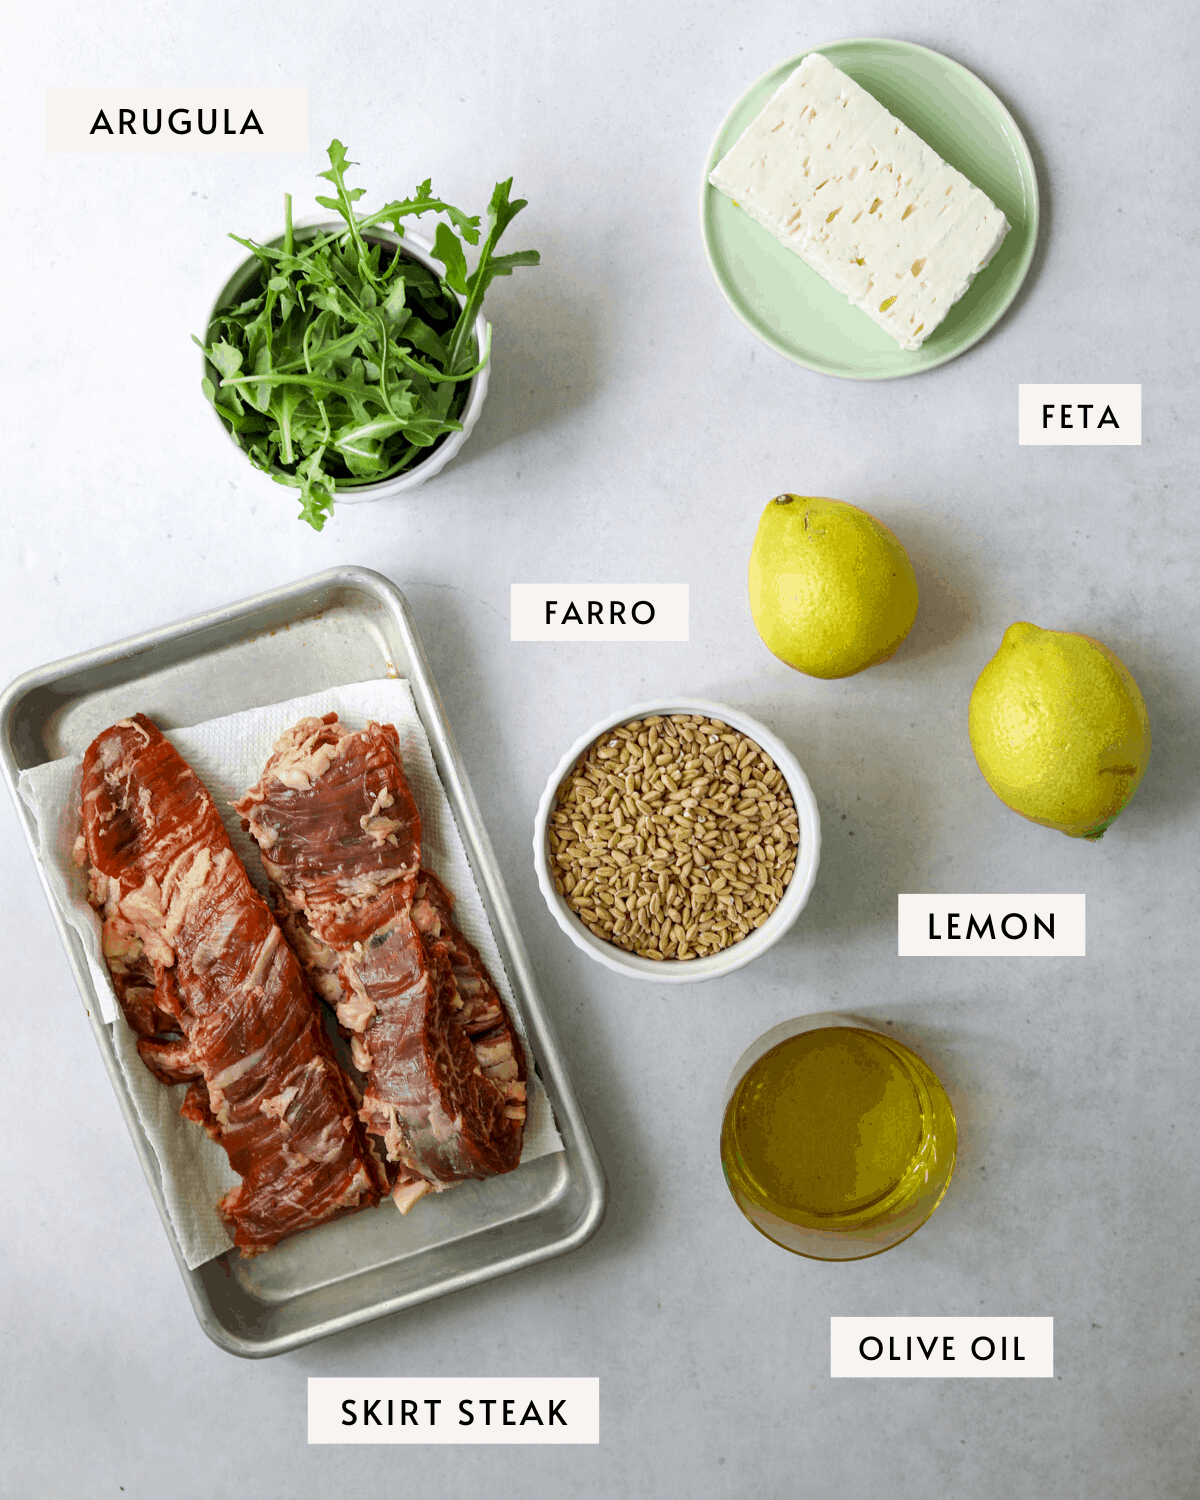 recipe ingredients; a bowl of arugula, a tray of skirt steak, lemons, feta cheese, farro, olive oil.